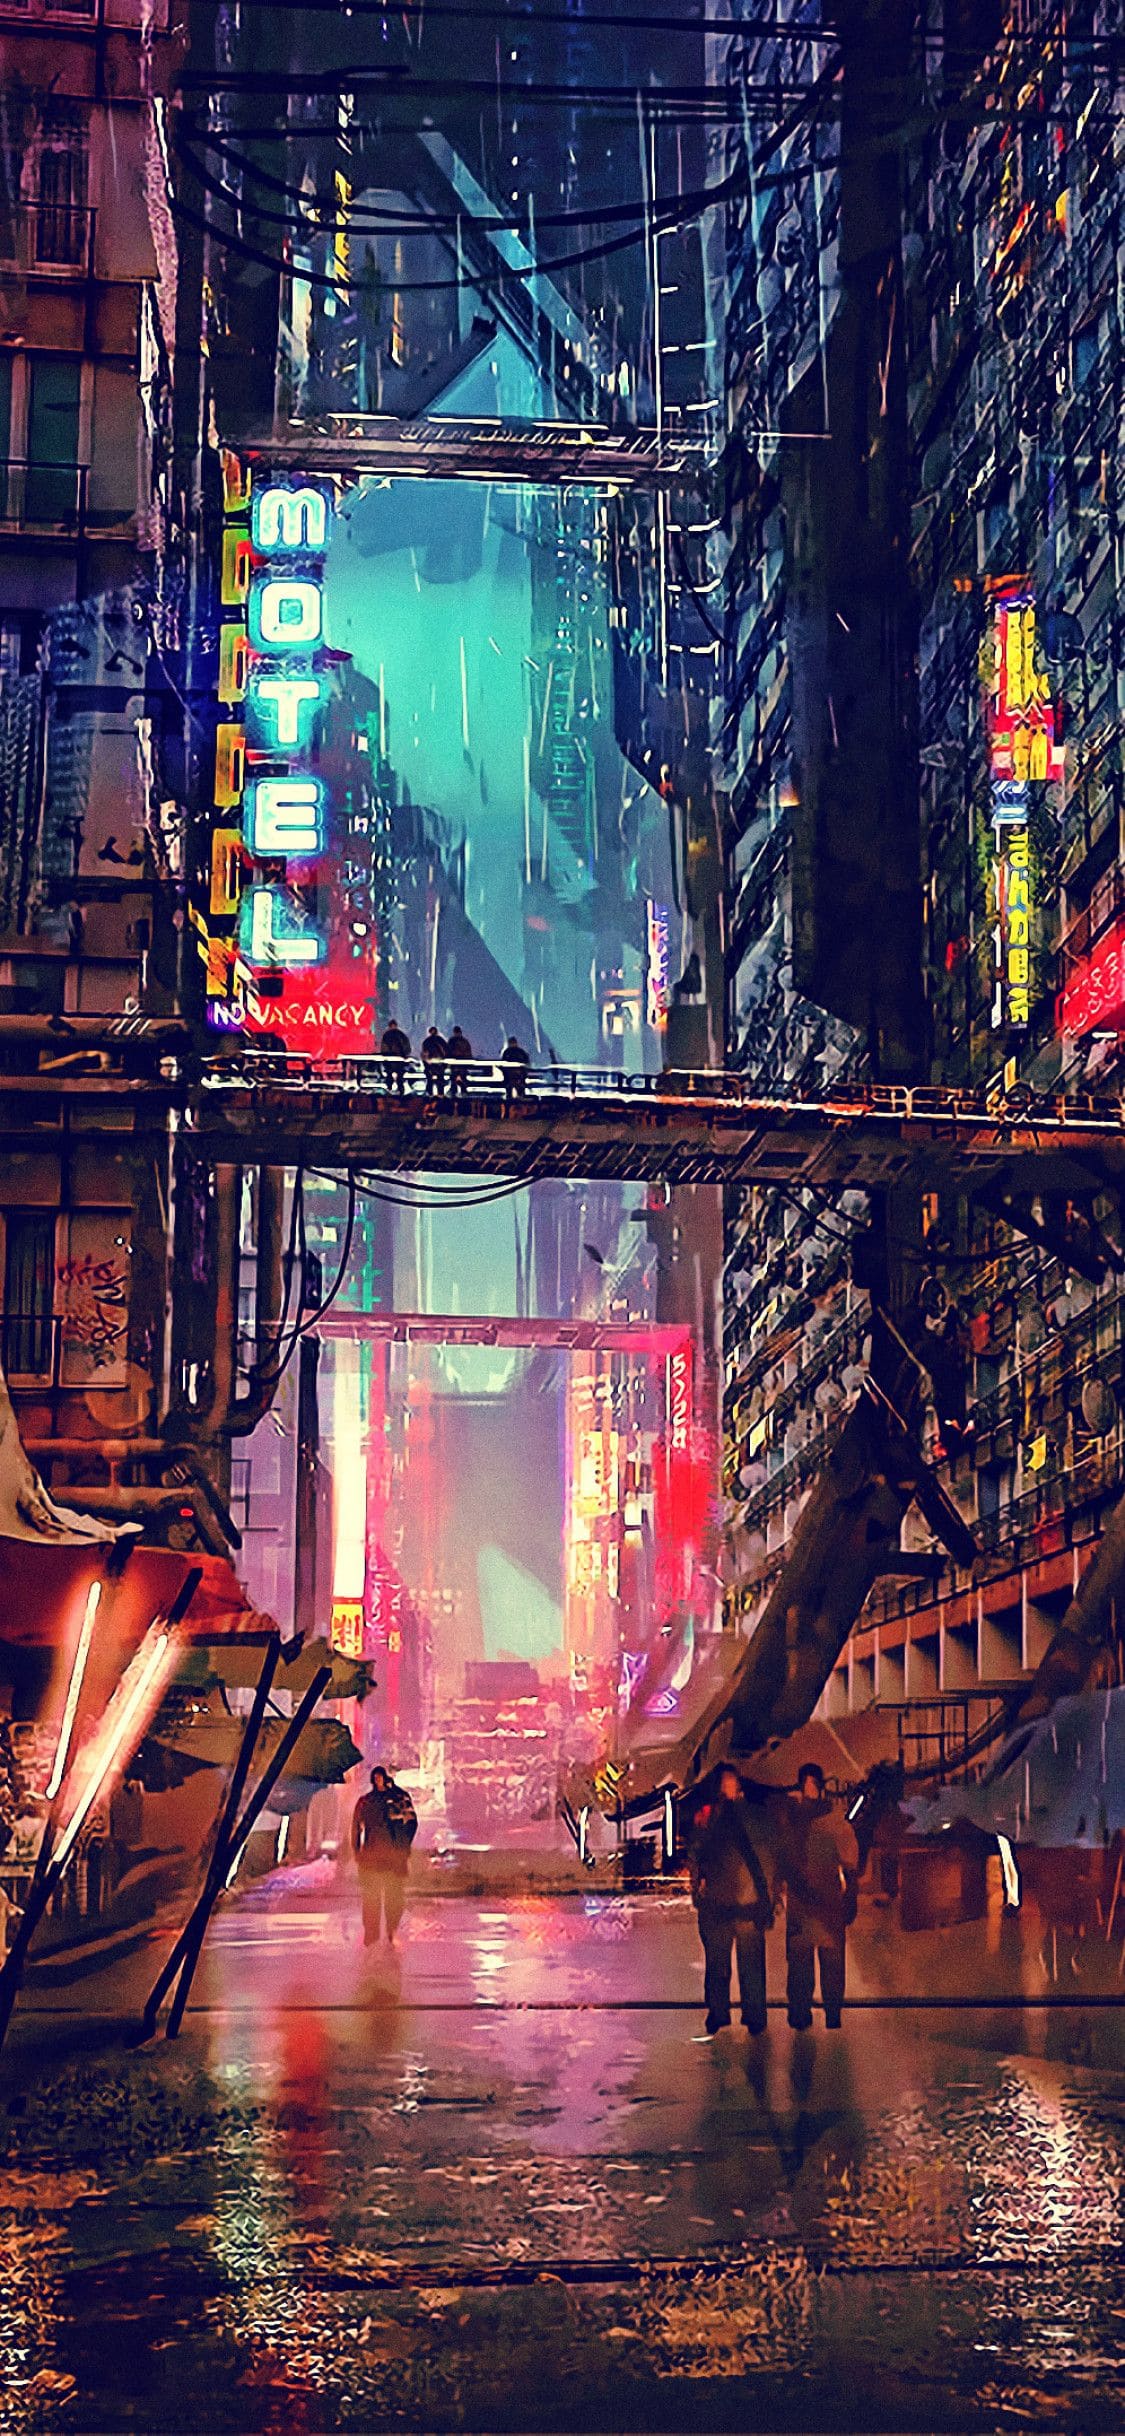 Cyberpunk City Wallpaper Desktop iPhone Laptop Mobile